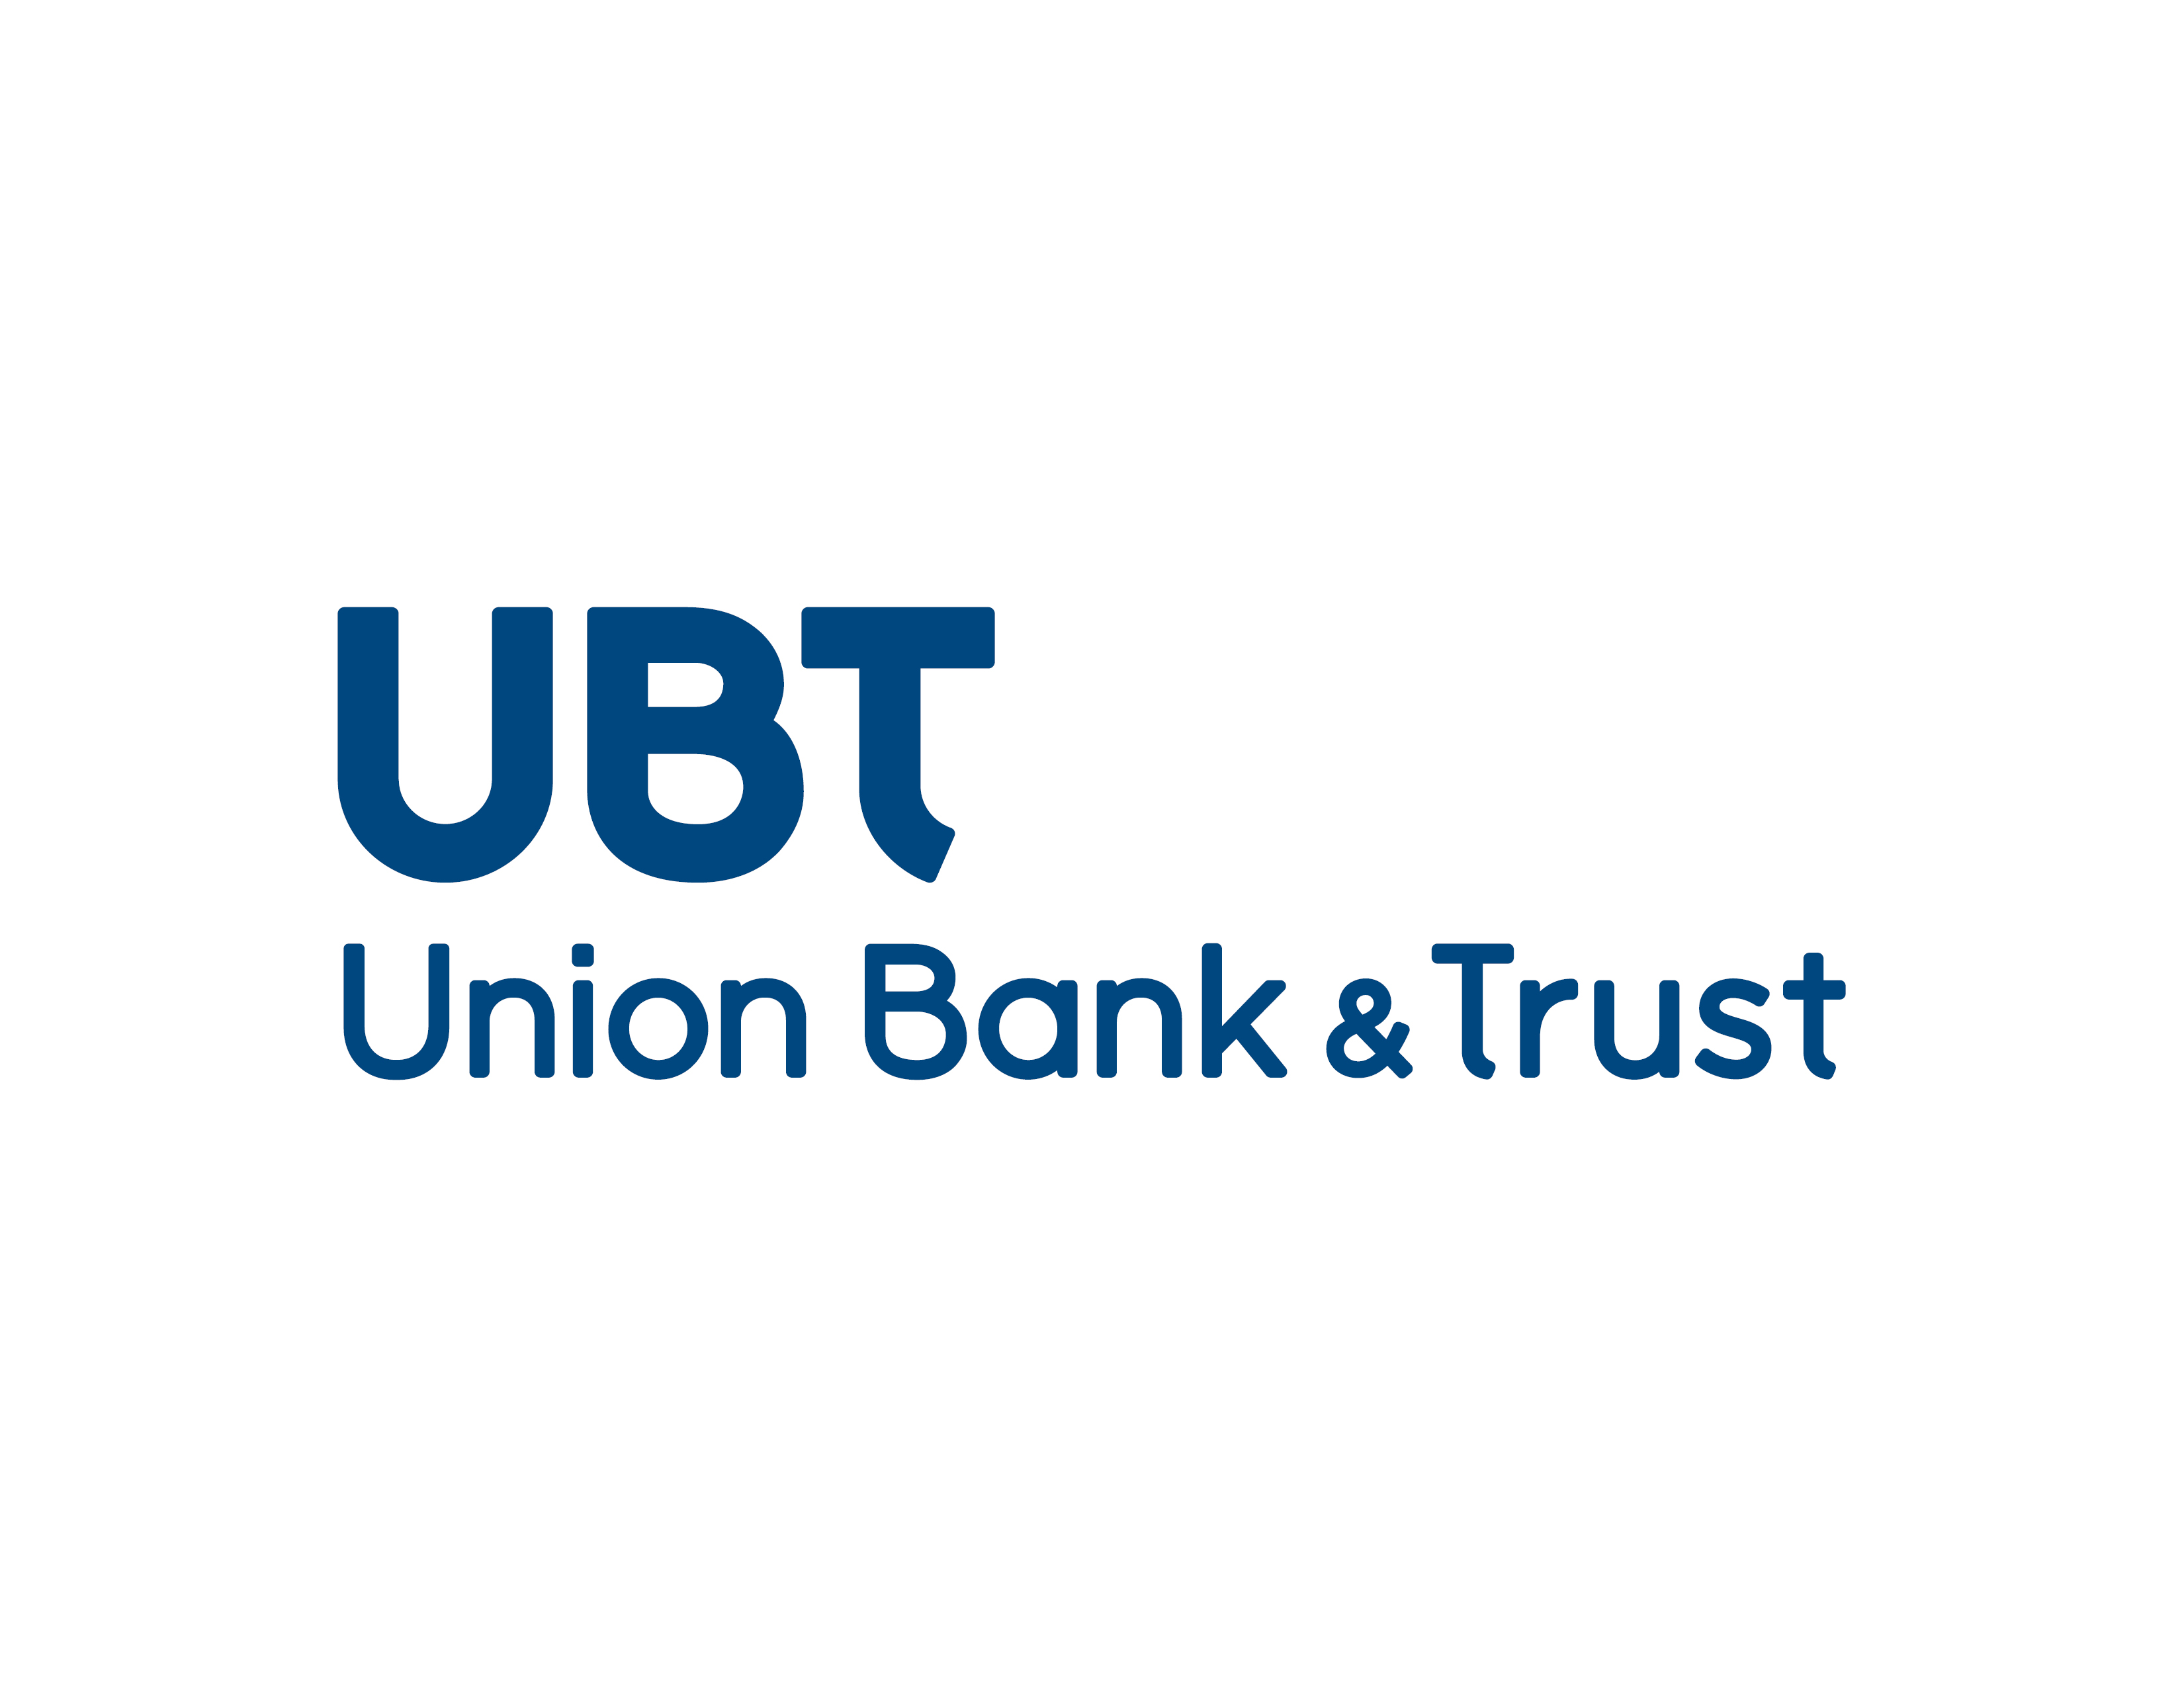 Union Bank & Trust Company